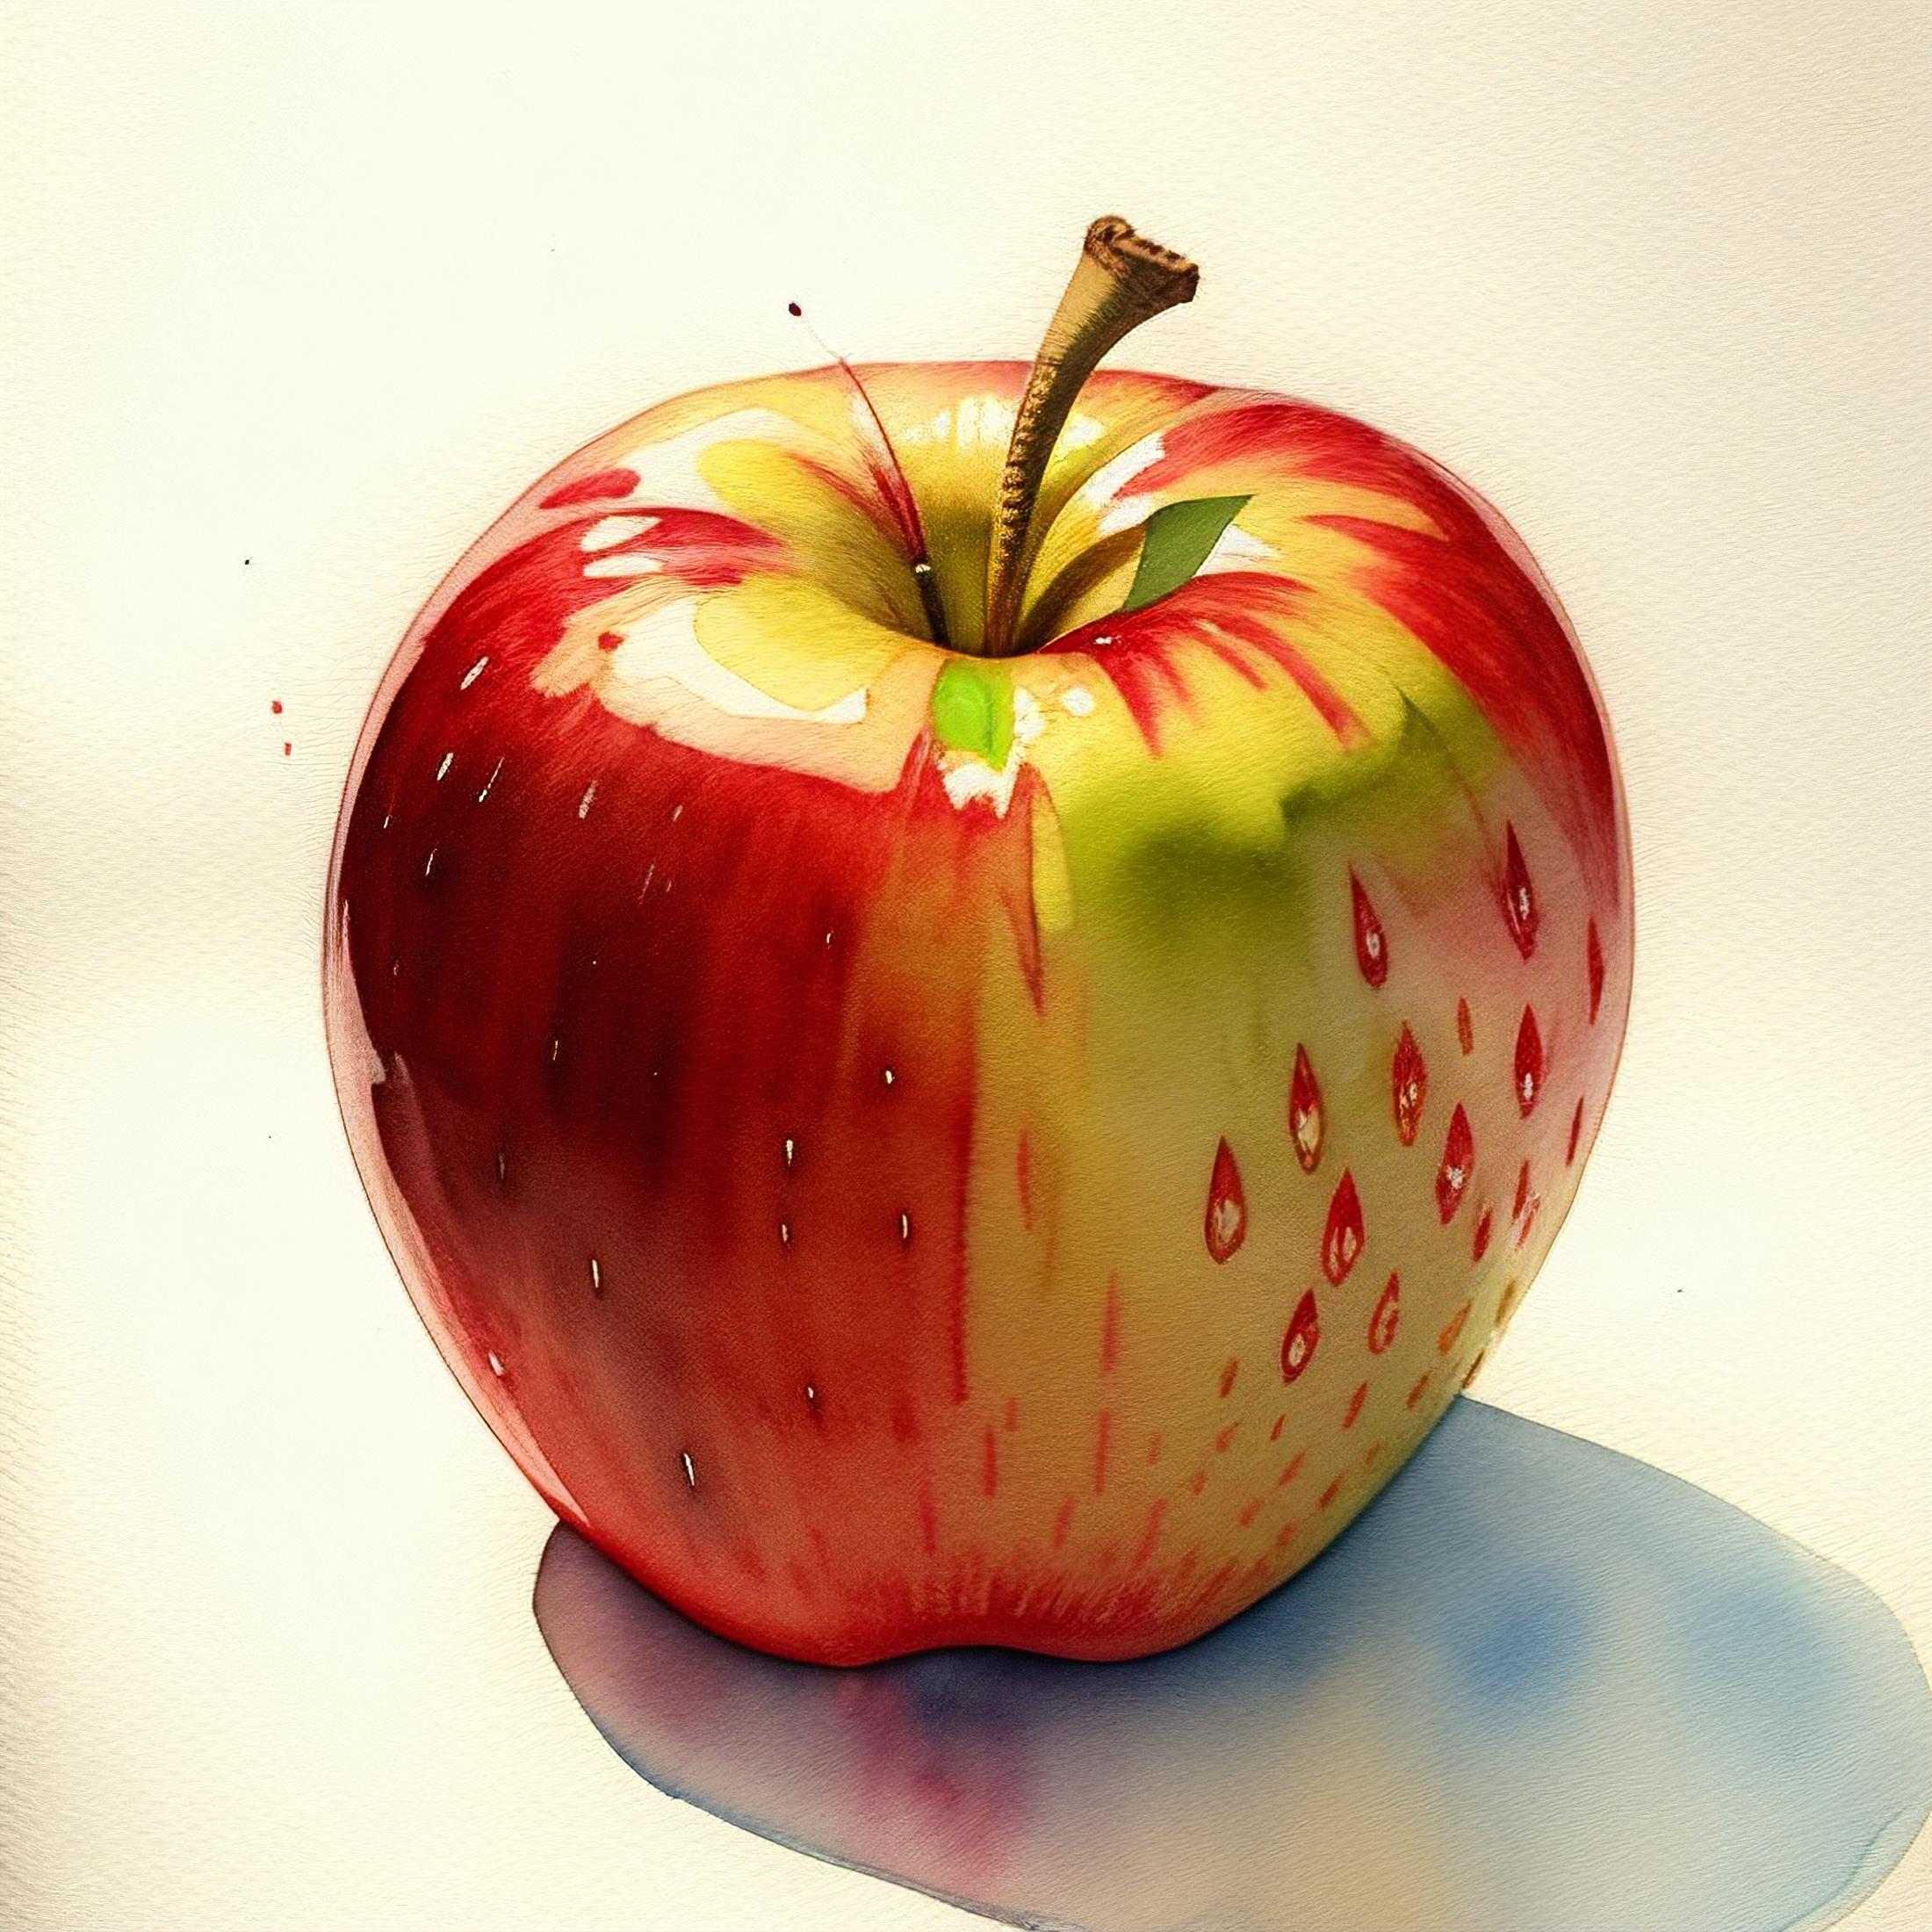 Fruity Nightmare image by JohnMach